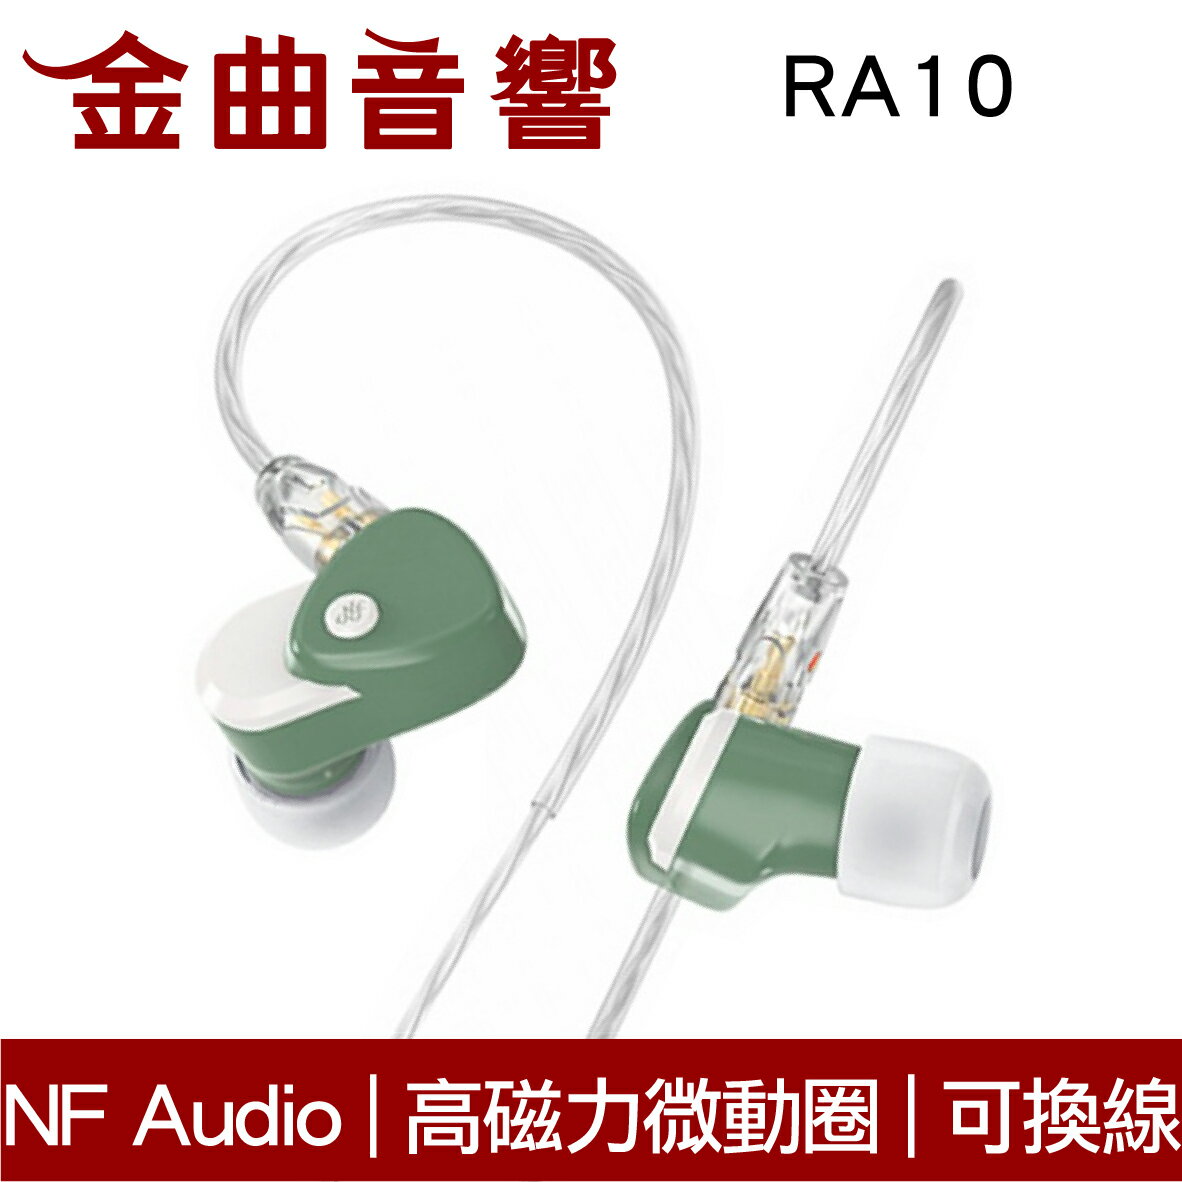 NF Audio 寧梵 RA10 綠色 高磁力 微動圈單元 被動降噪 可換線 入耳式 耳機 | 金曲音響